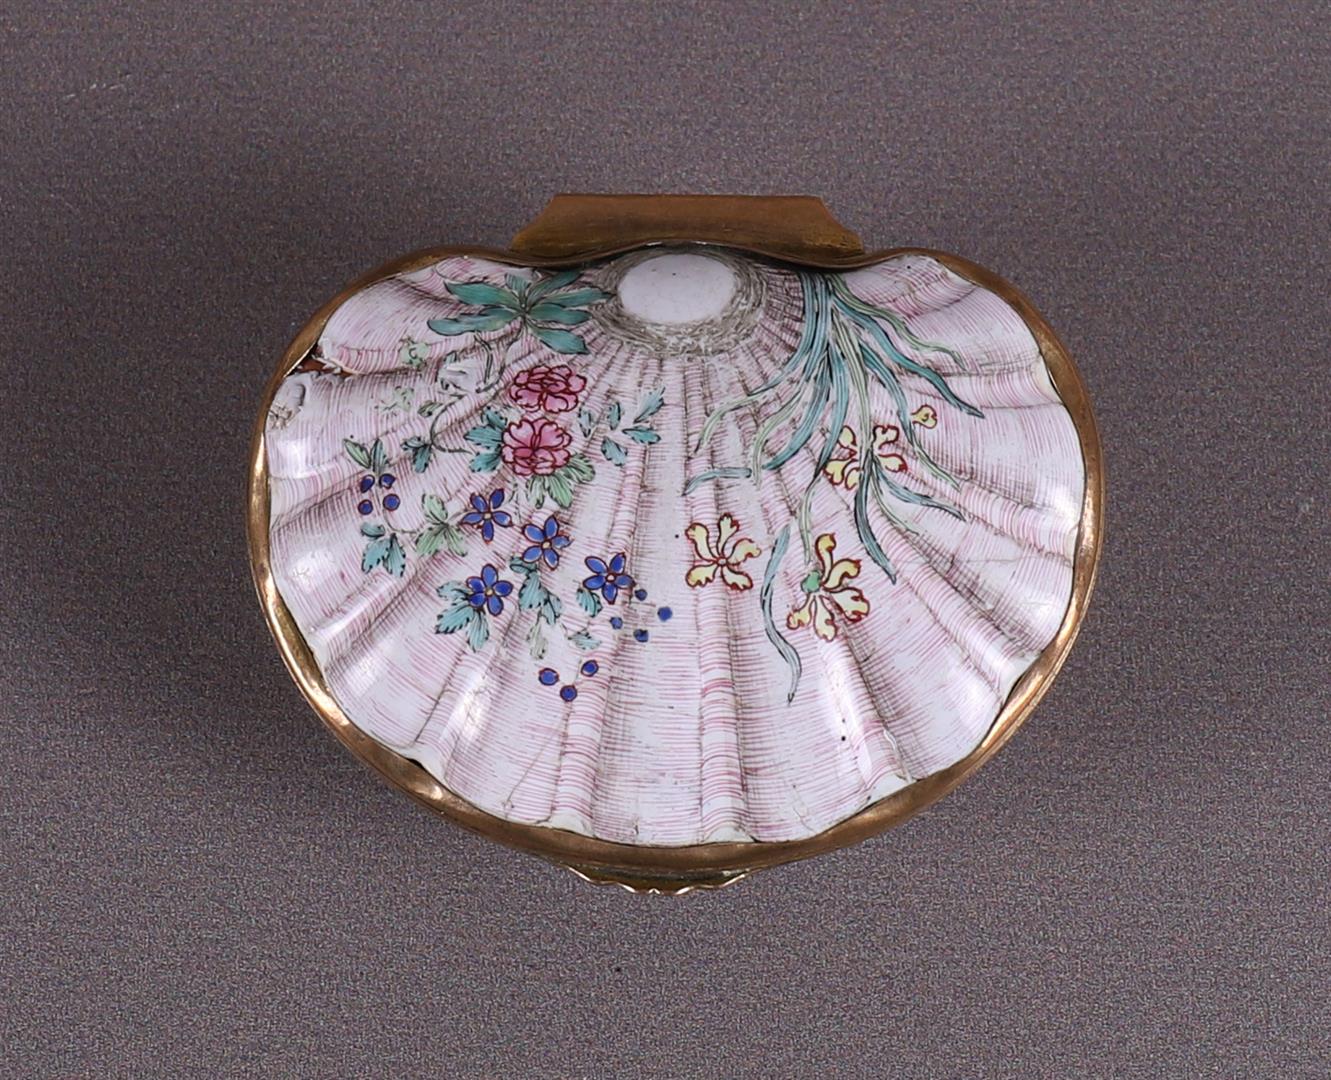 A brass and enamel shell-shaped tobacco box, circa 1800.